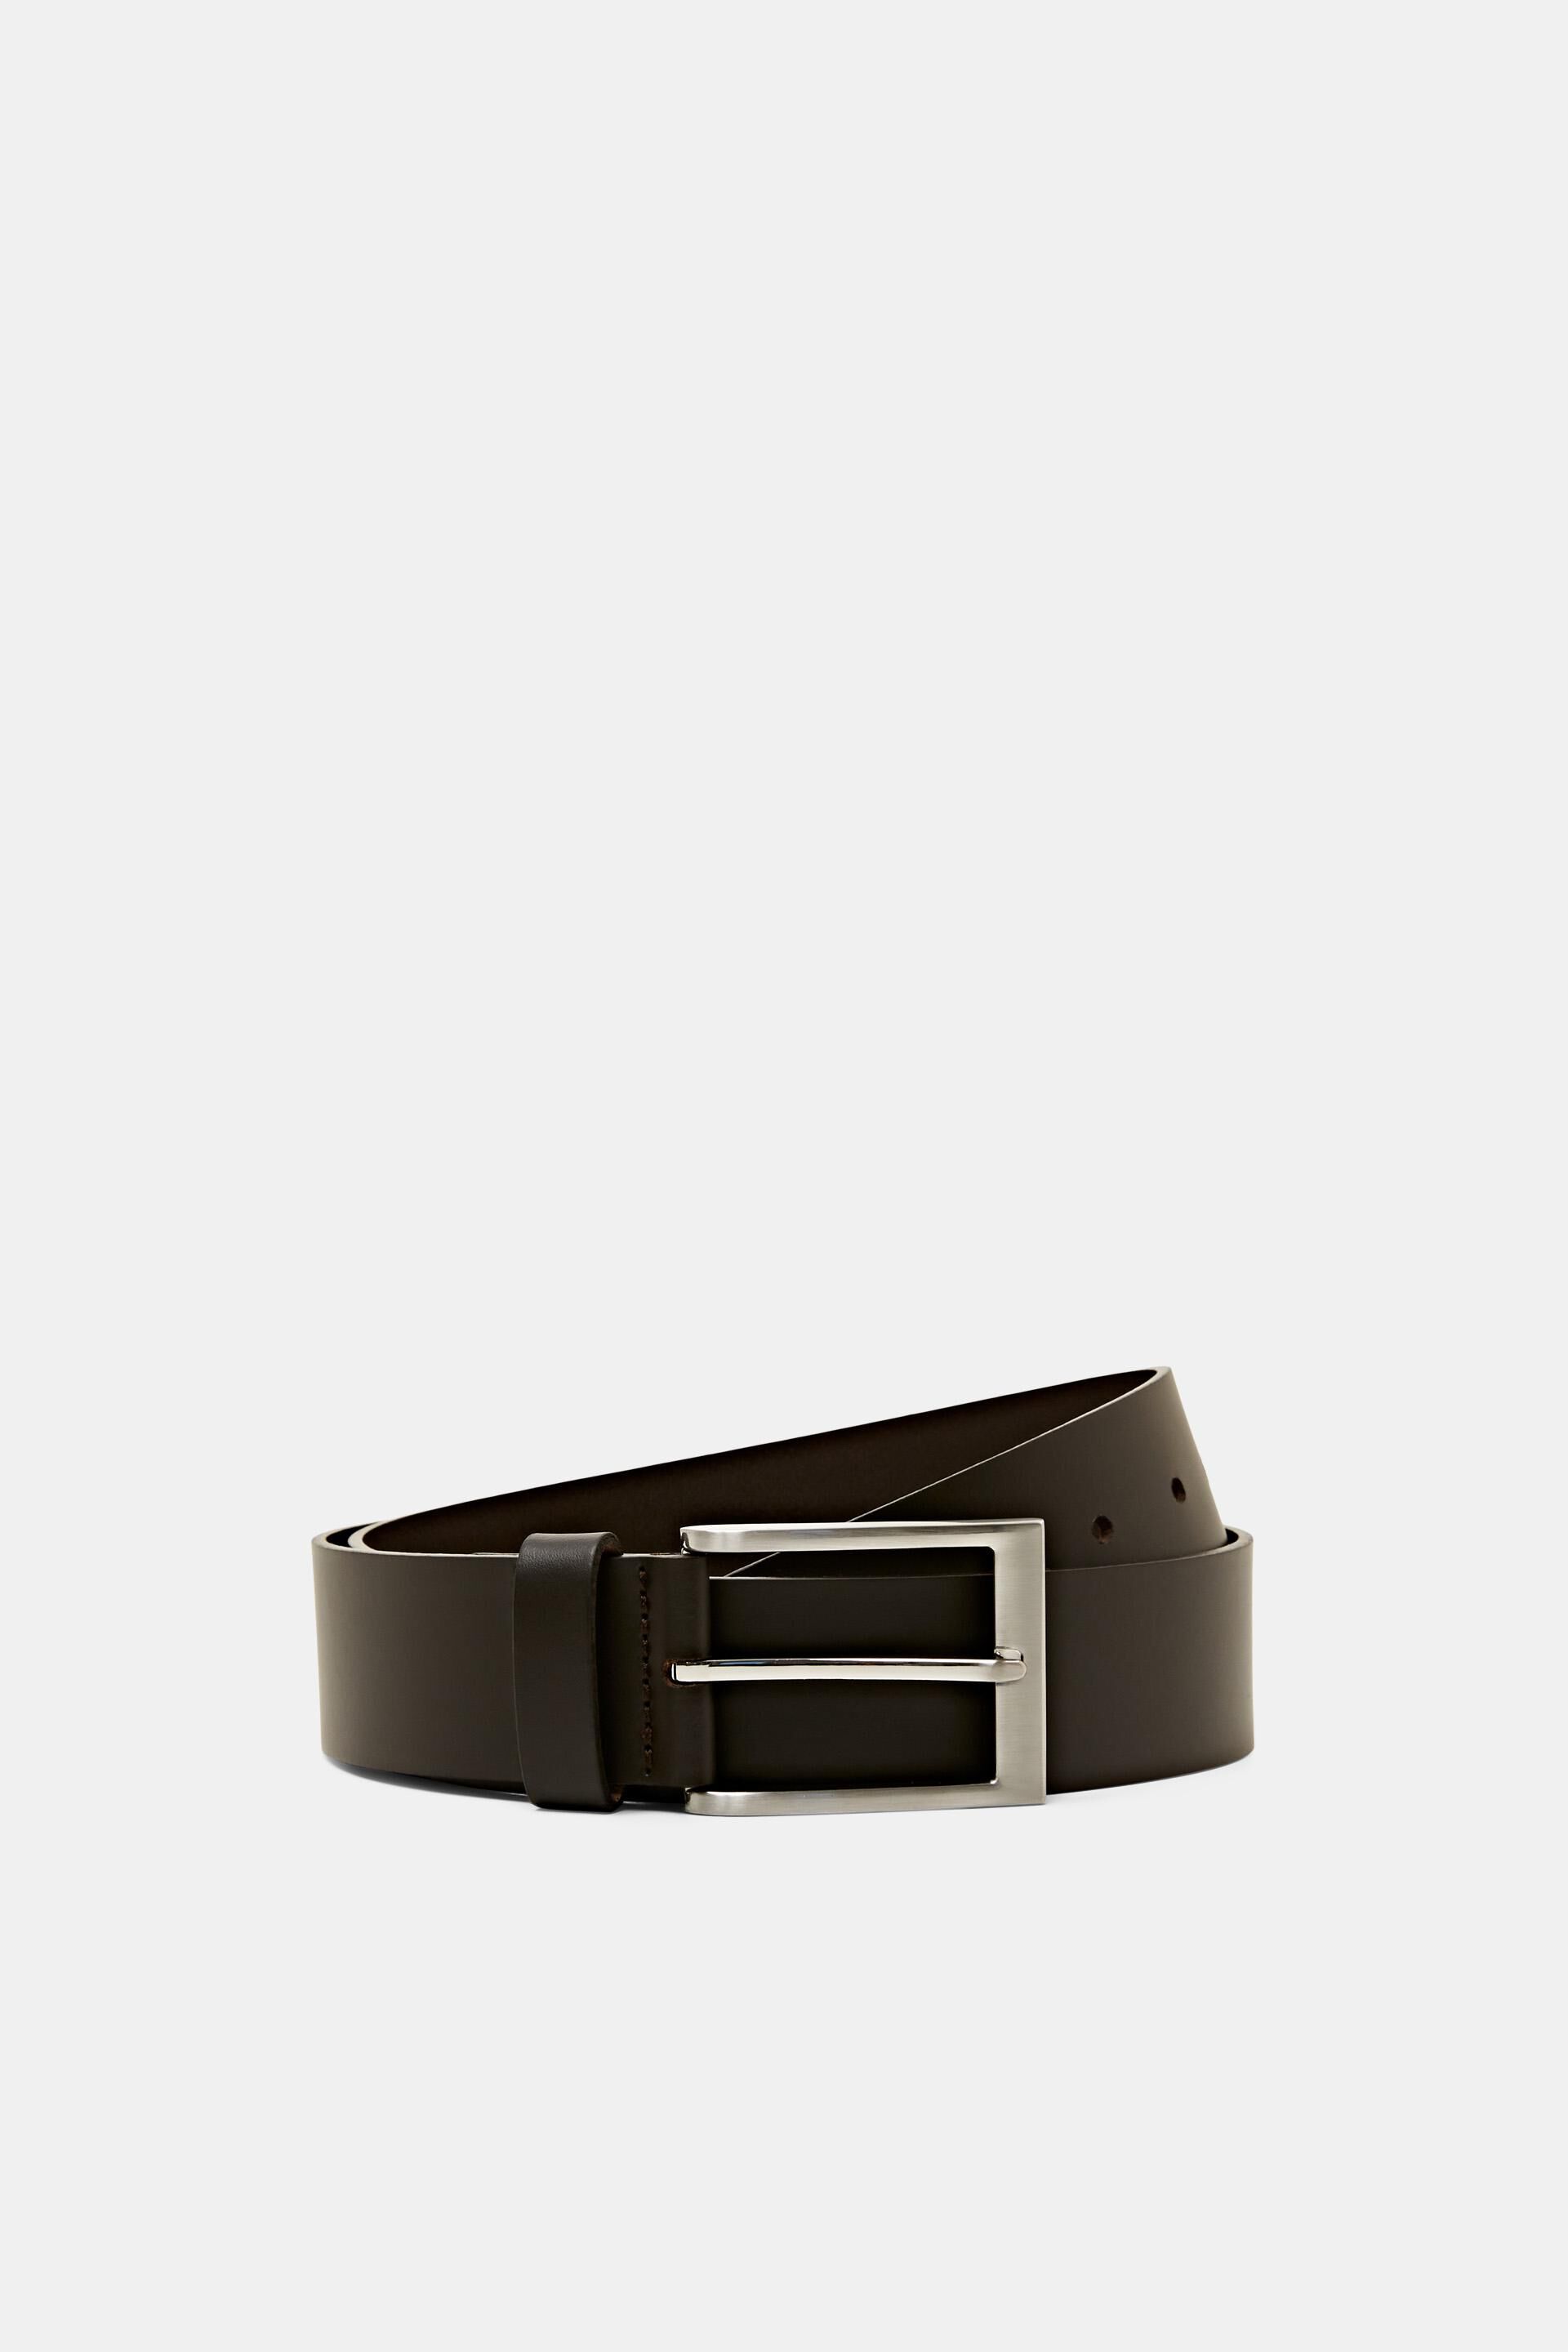 Silver square solid brass buckle (short) - black leather belt - 4cm width